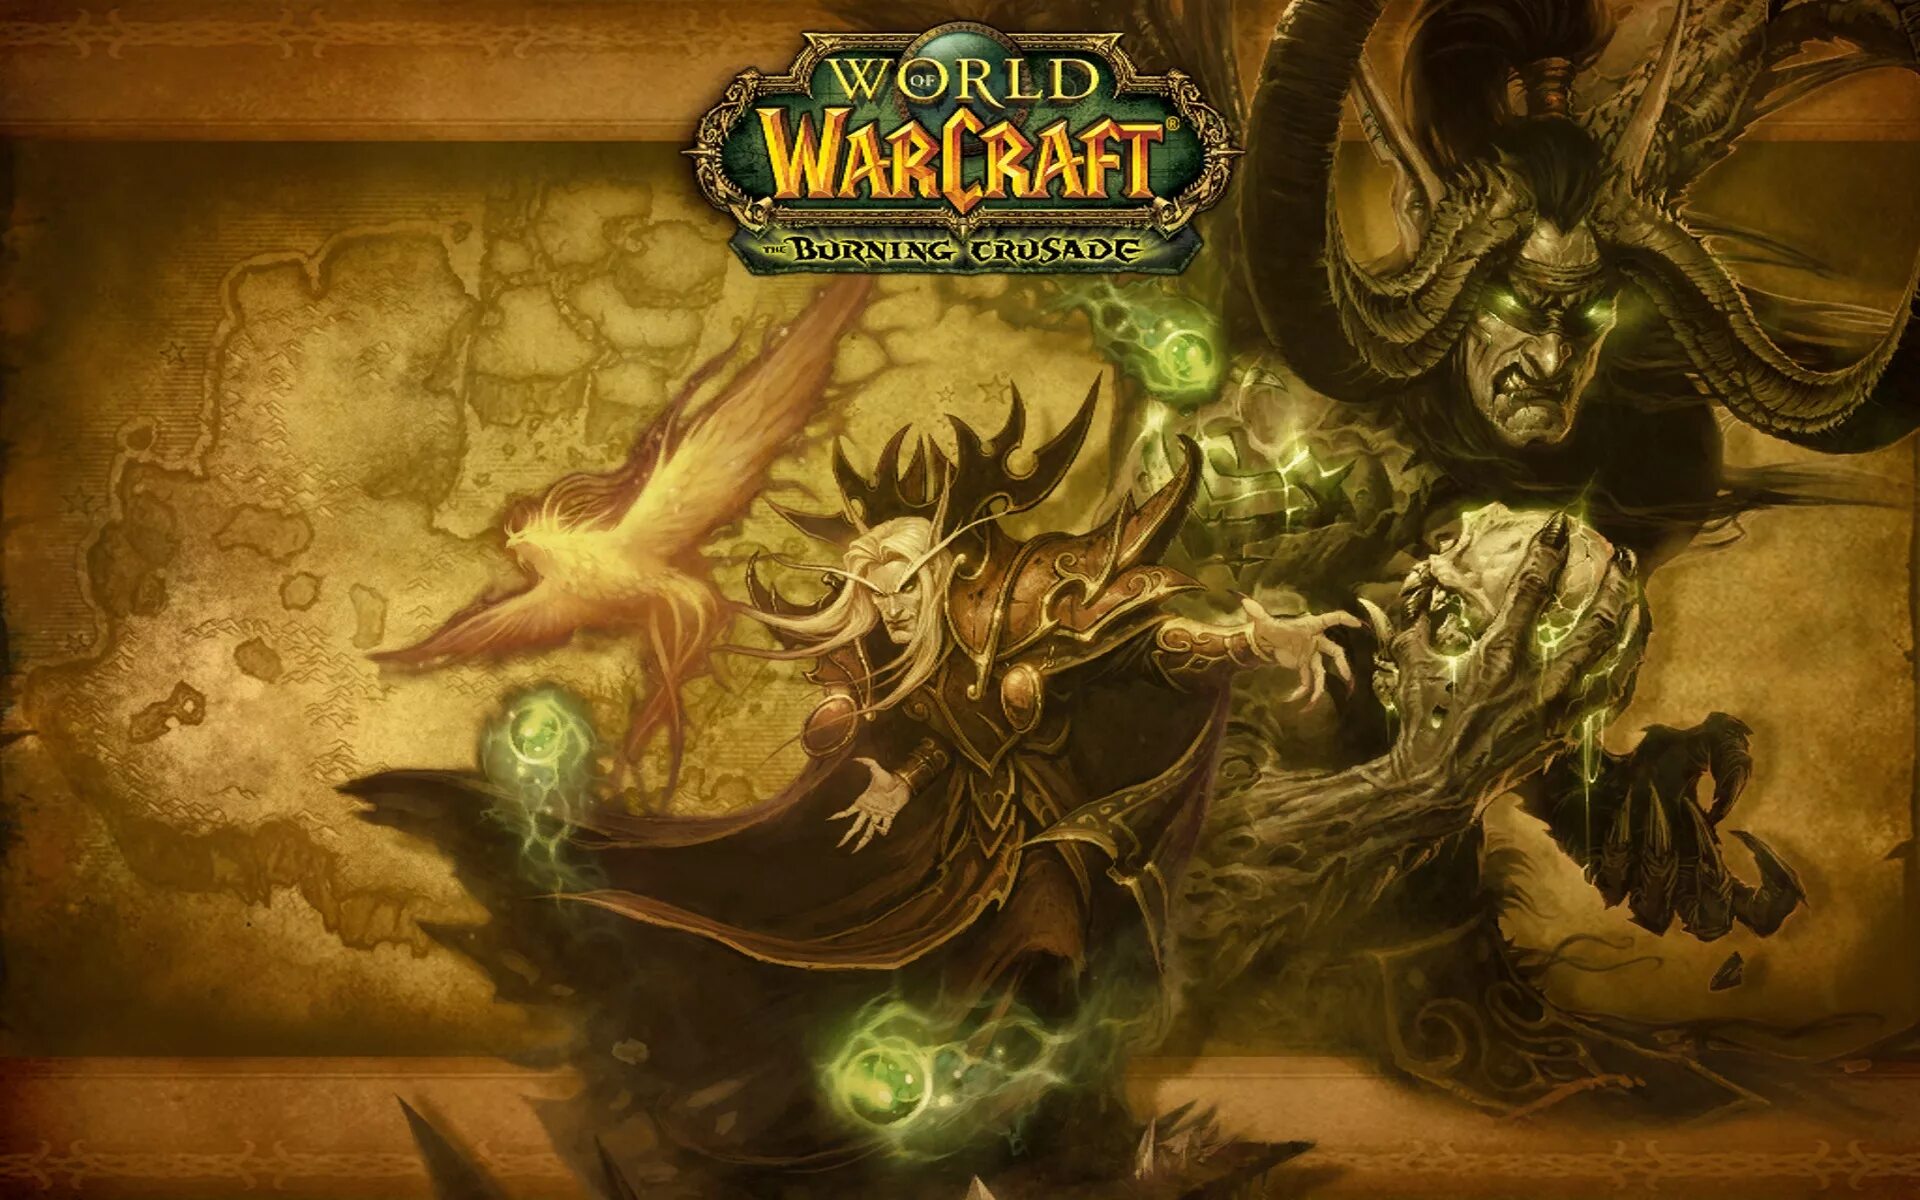 Warcraft 3 экран загрузки. Варкрафт 3 Бернинг Крусейд. World of Warcraft Burning Crusade загрузочные экраны. Wow Classic загрузочный экран. Загрузочный экран 3